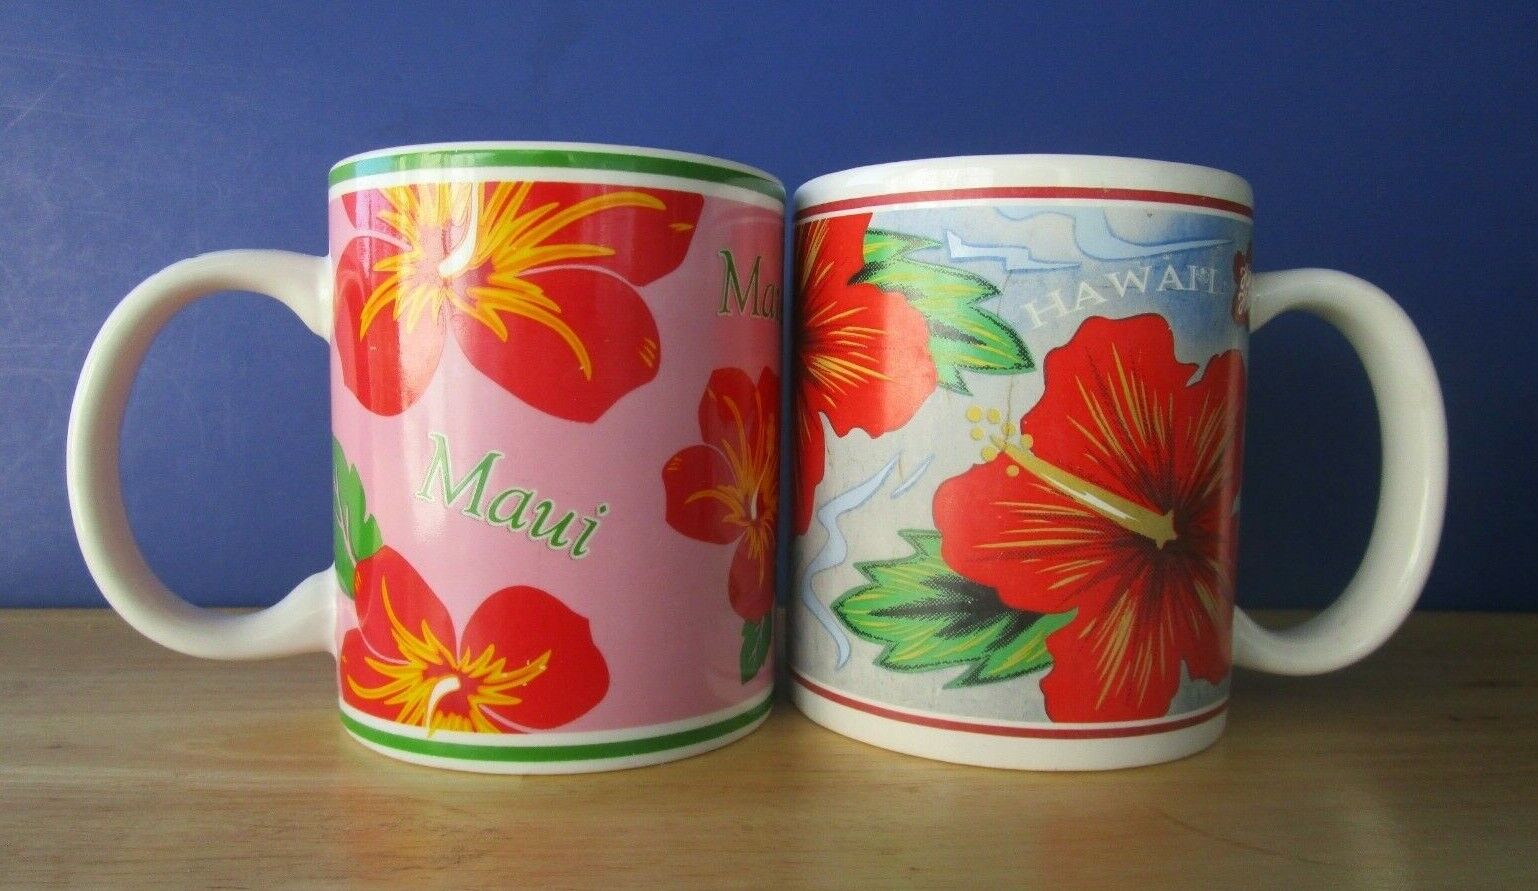 2 HILO HATTIE Mugs "Store of Hawaii" Red Hibiscus Flowers, Island Heritage 1996 Hilo Hattie